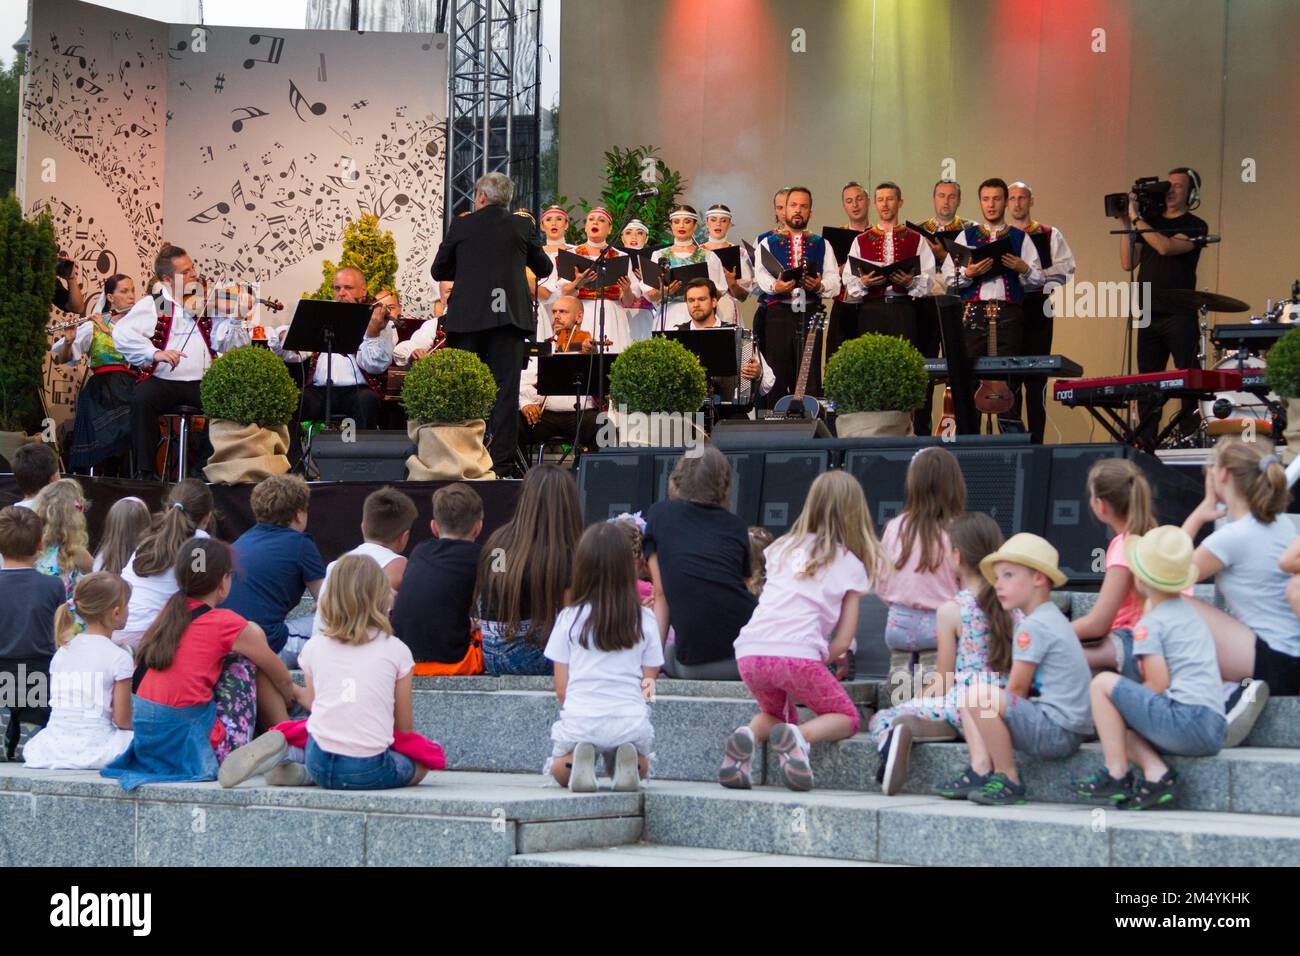 Poddukelský umelecký ľudový súbor (PUĽS) preforming at the benefit concert 'Večer ľudí dobrej vôle' (People of Good Will's Evening) in Nitra, Slovakia. Stock Photo